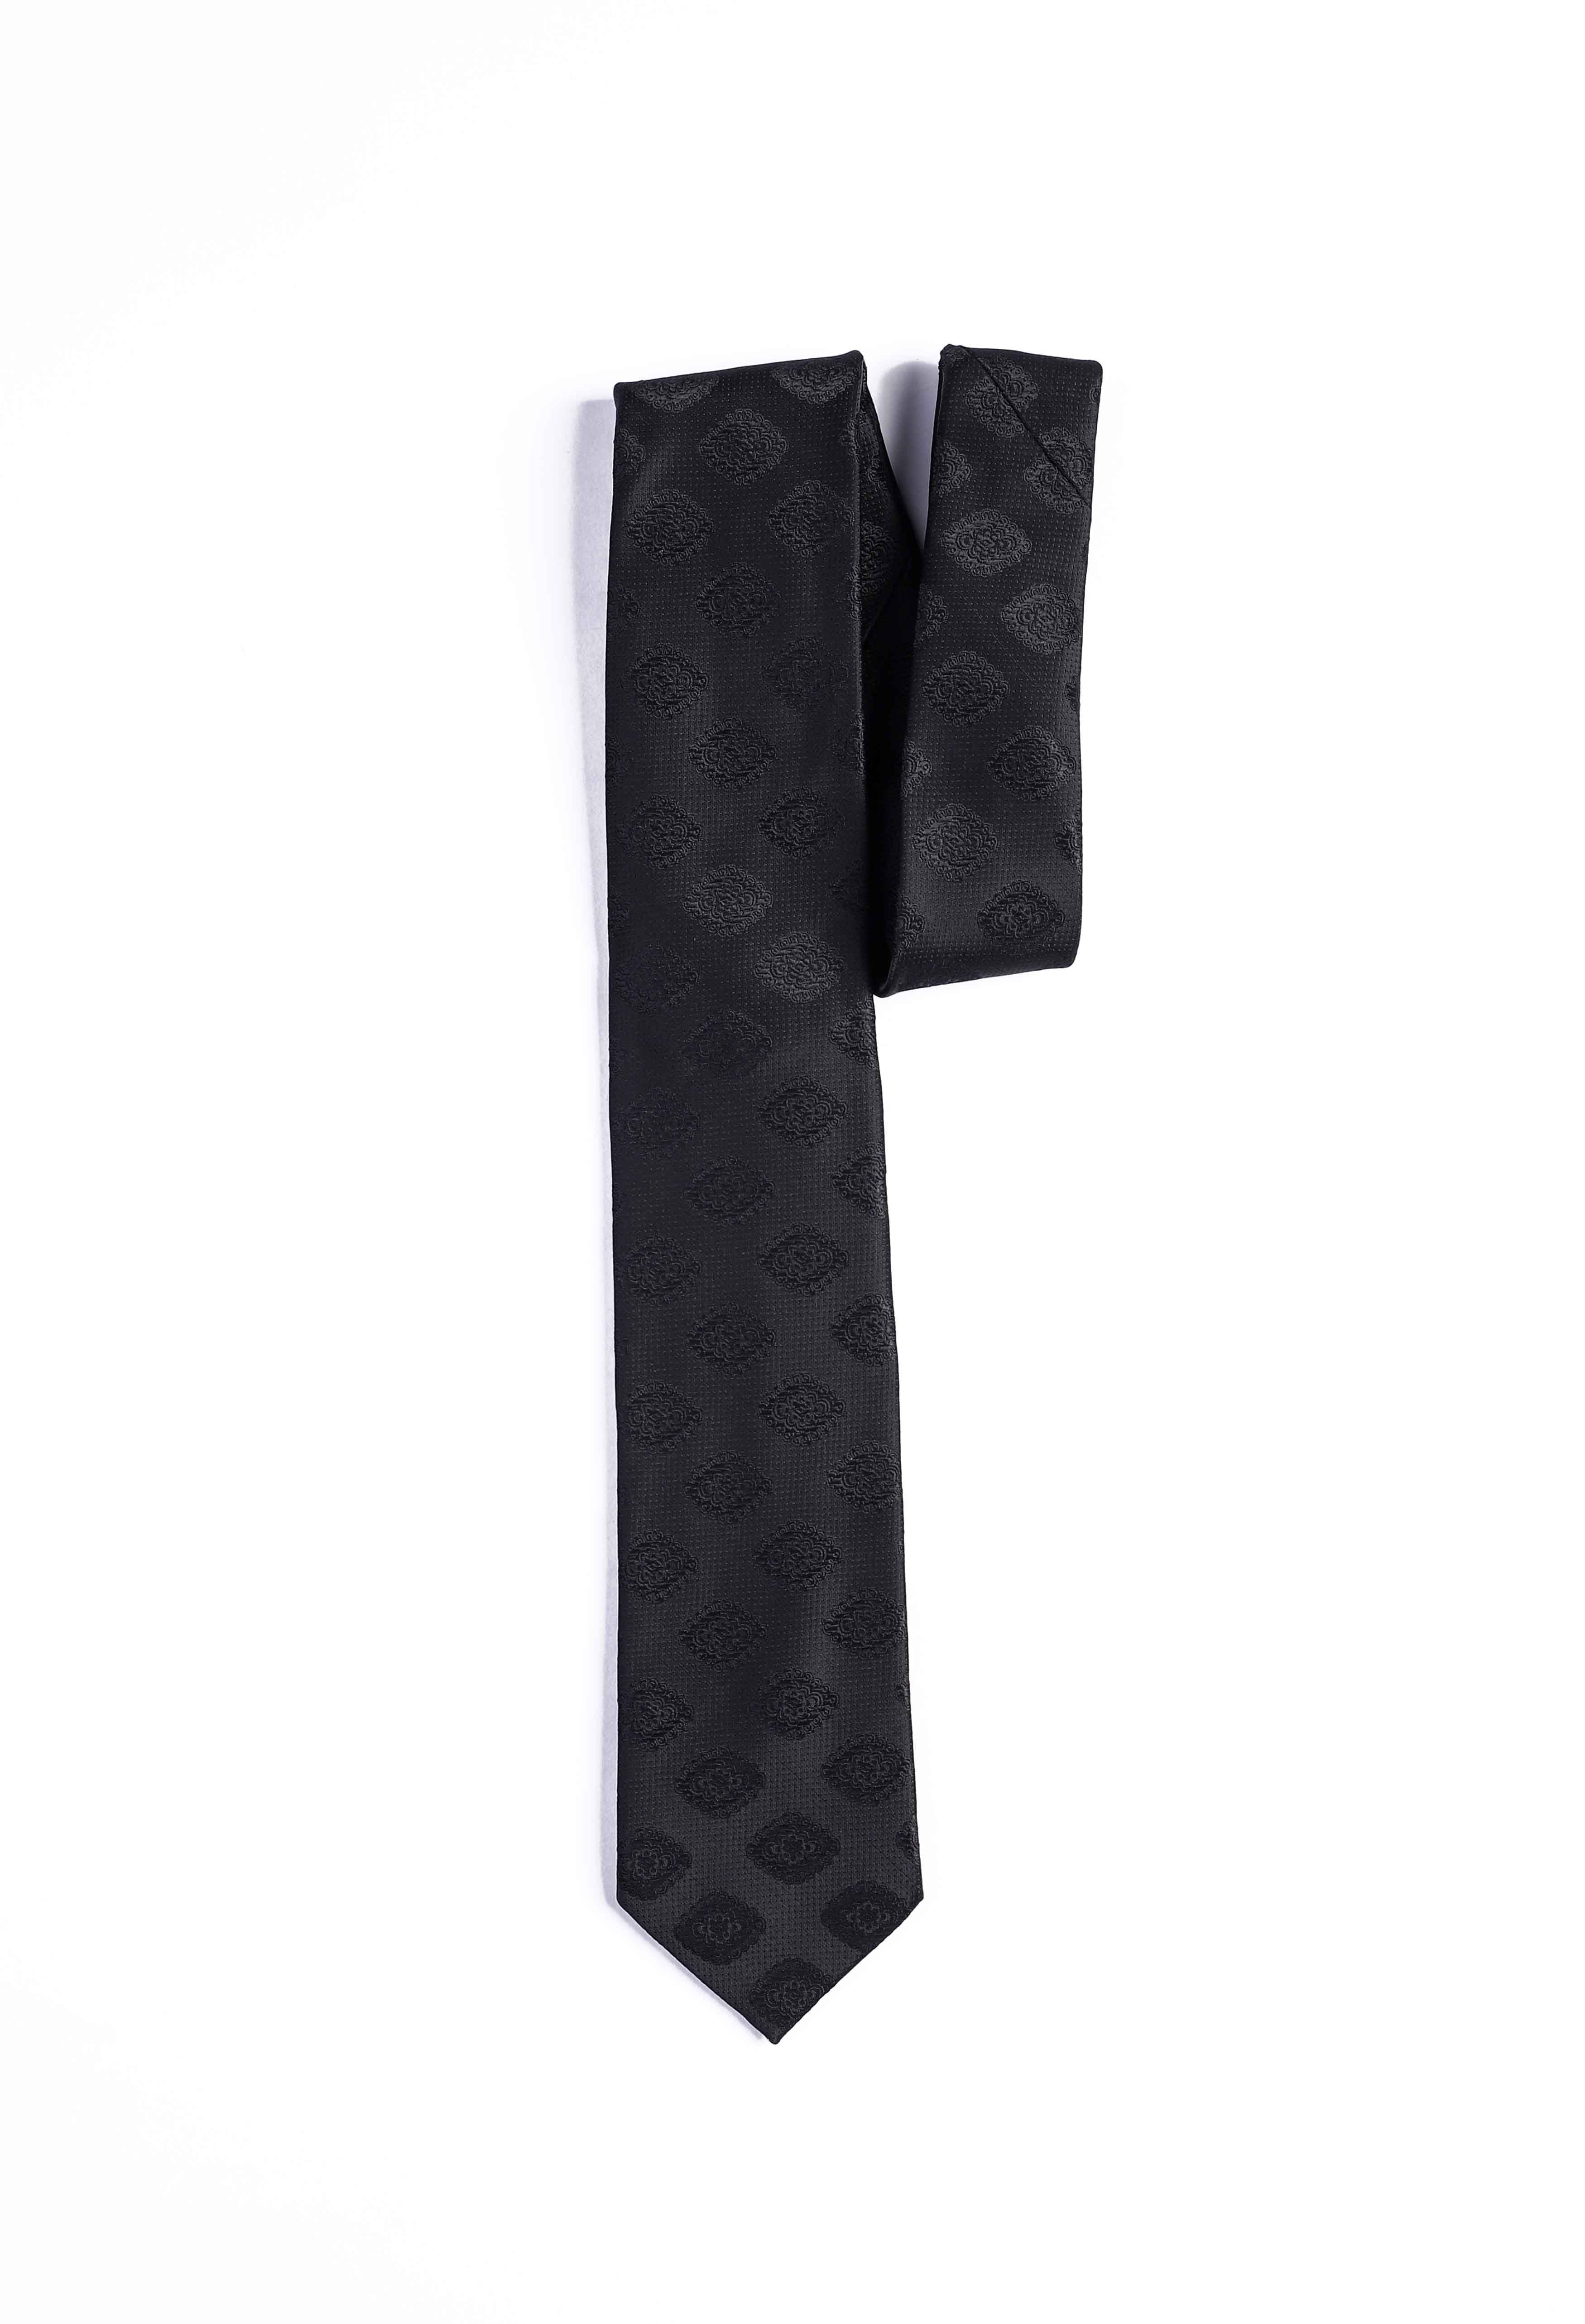 Winter Black Self Square Tie (TIE-000029)